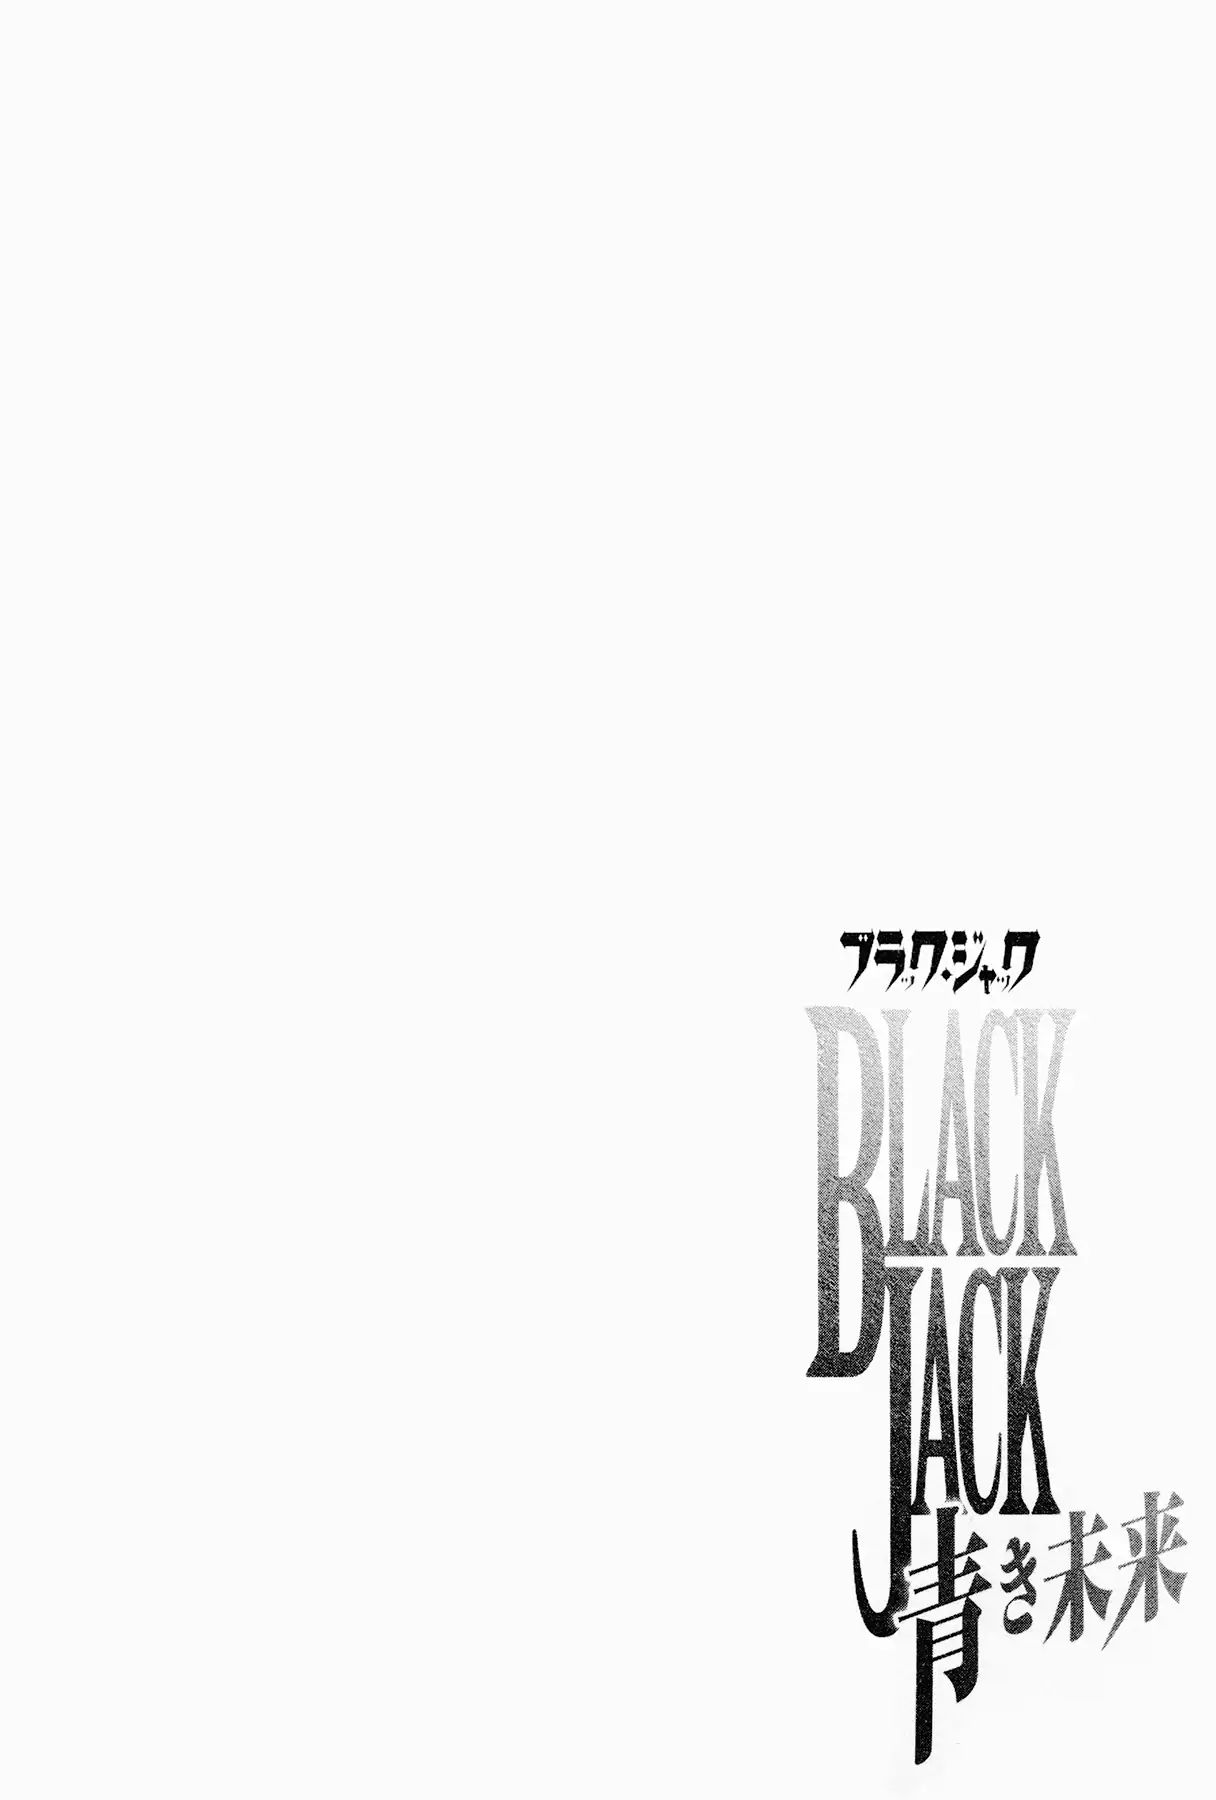 Black Jack: Blue Future - Page 2